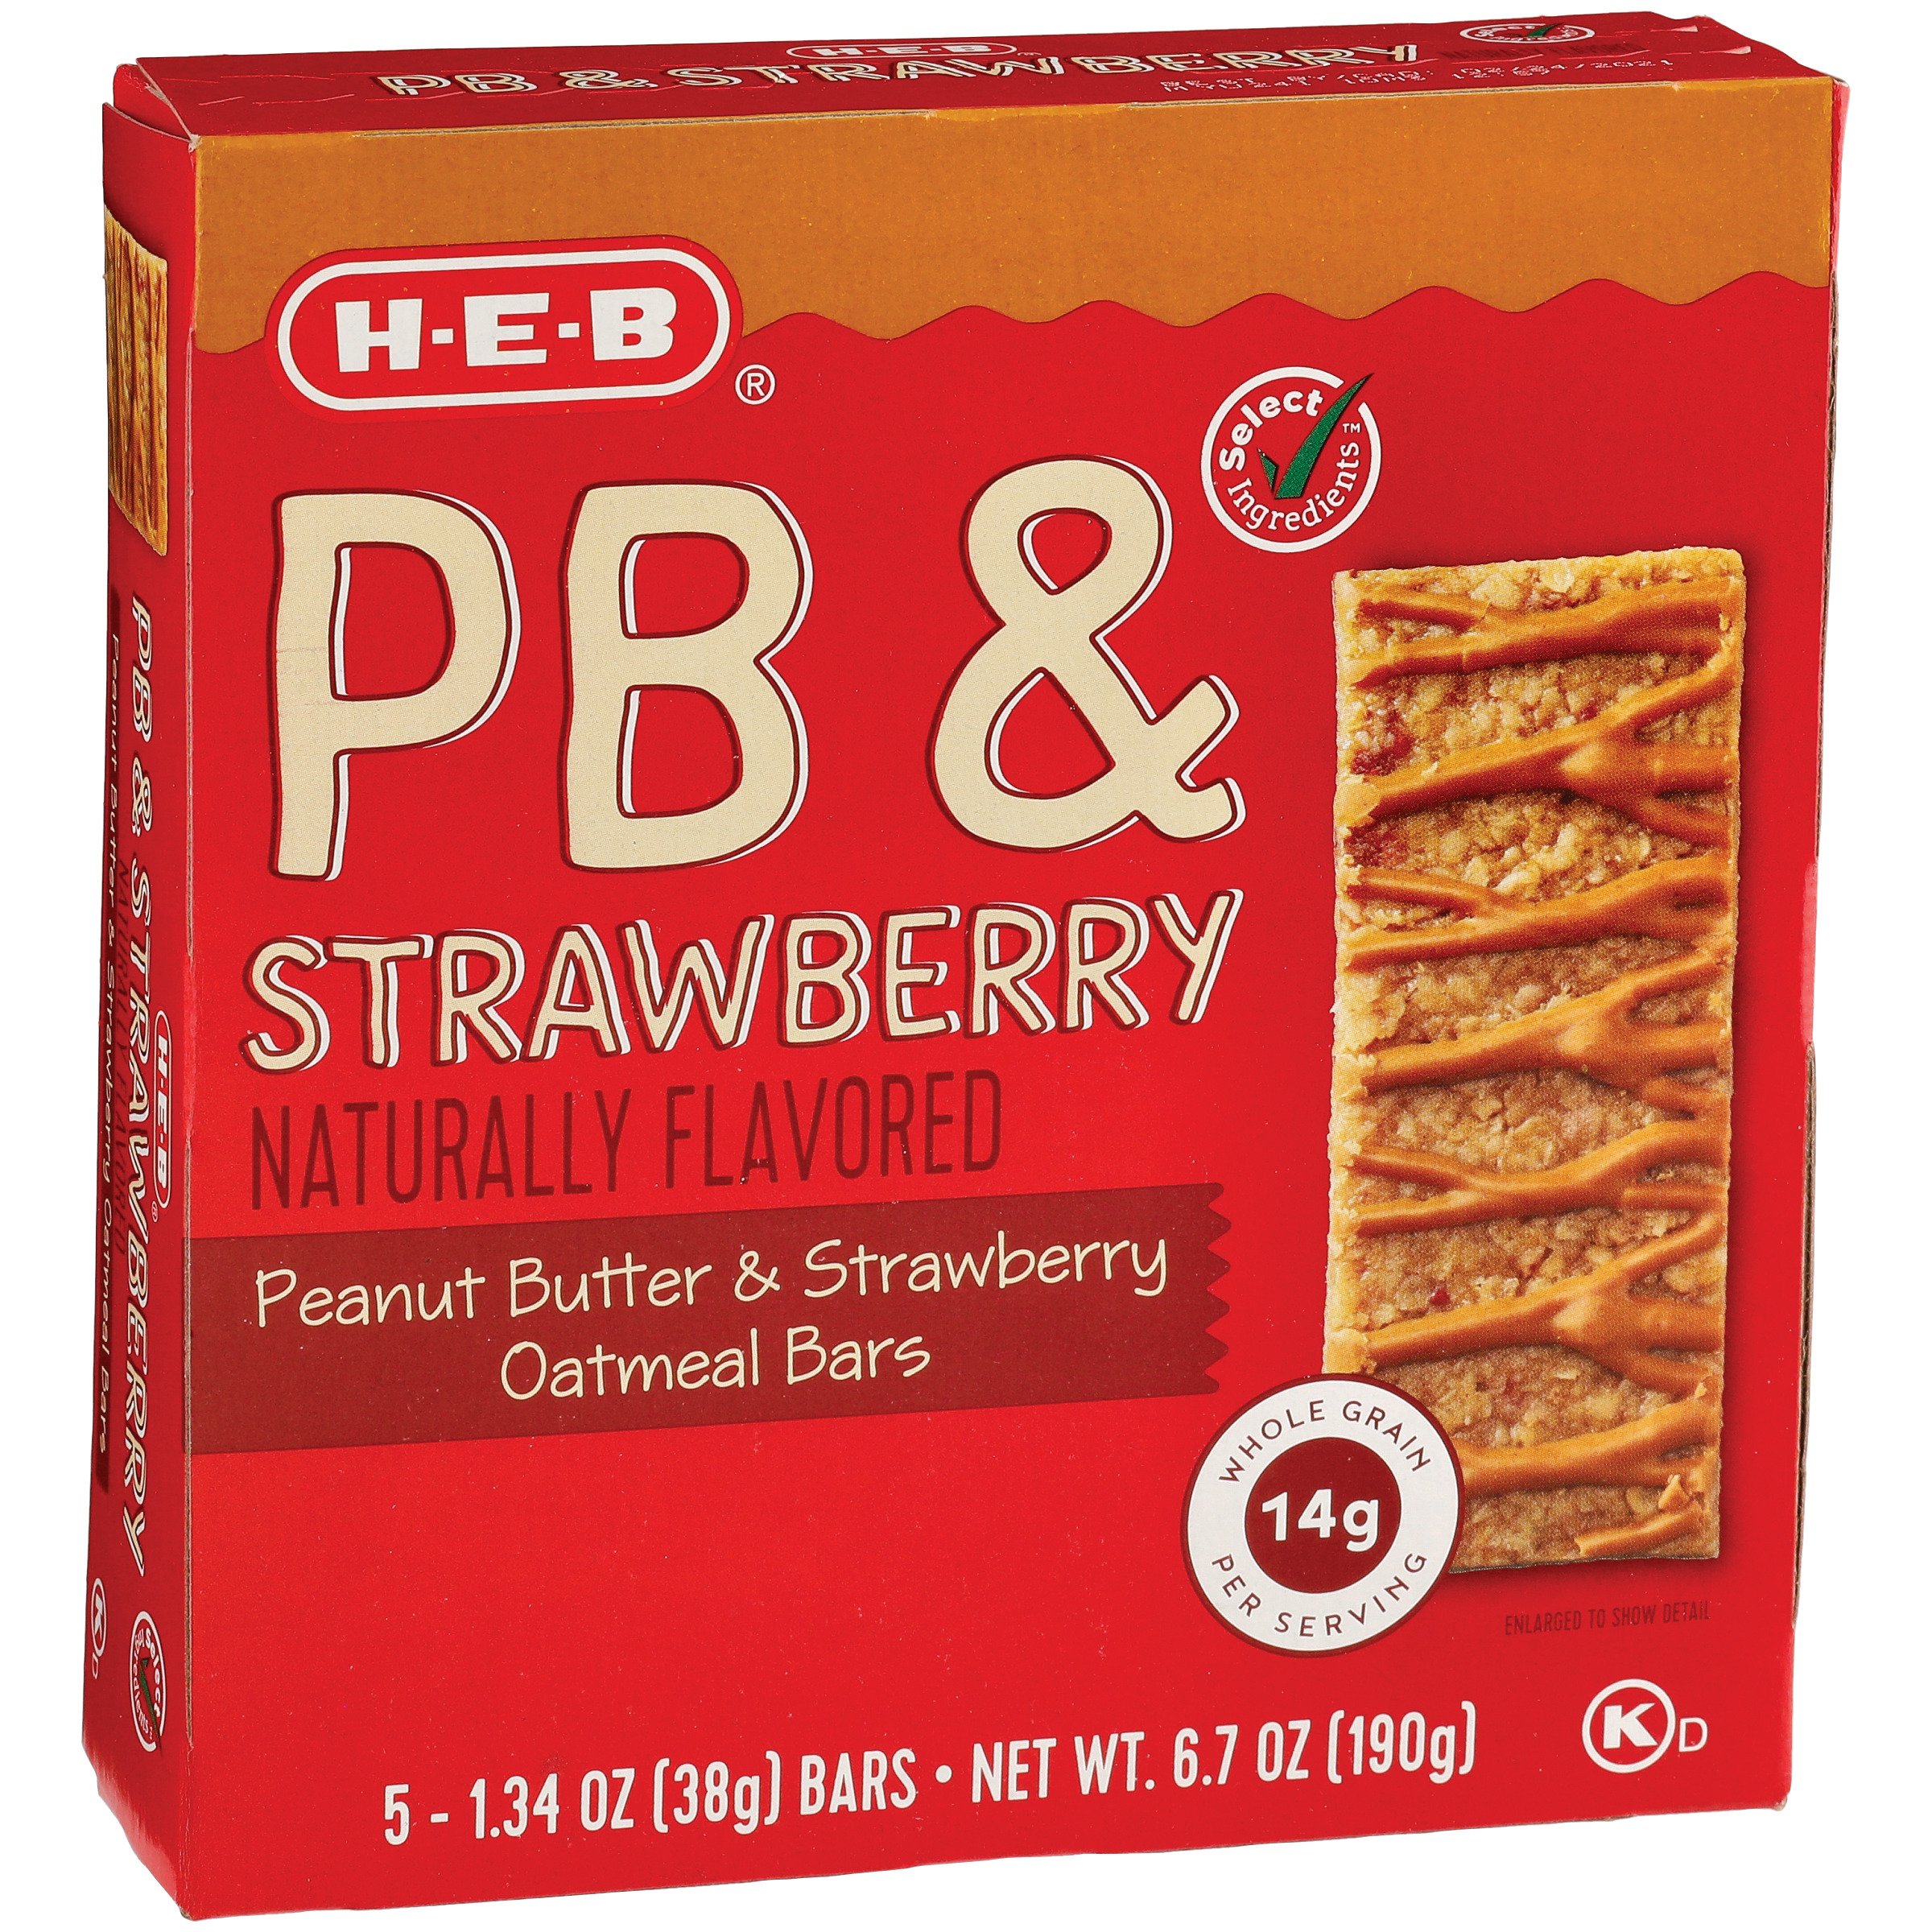 H E B Peanut Butter Strawberry Jelly Oatmeal Bars Shop Granola Snack Bars At H E B